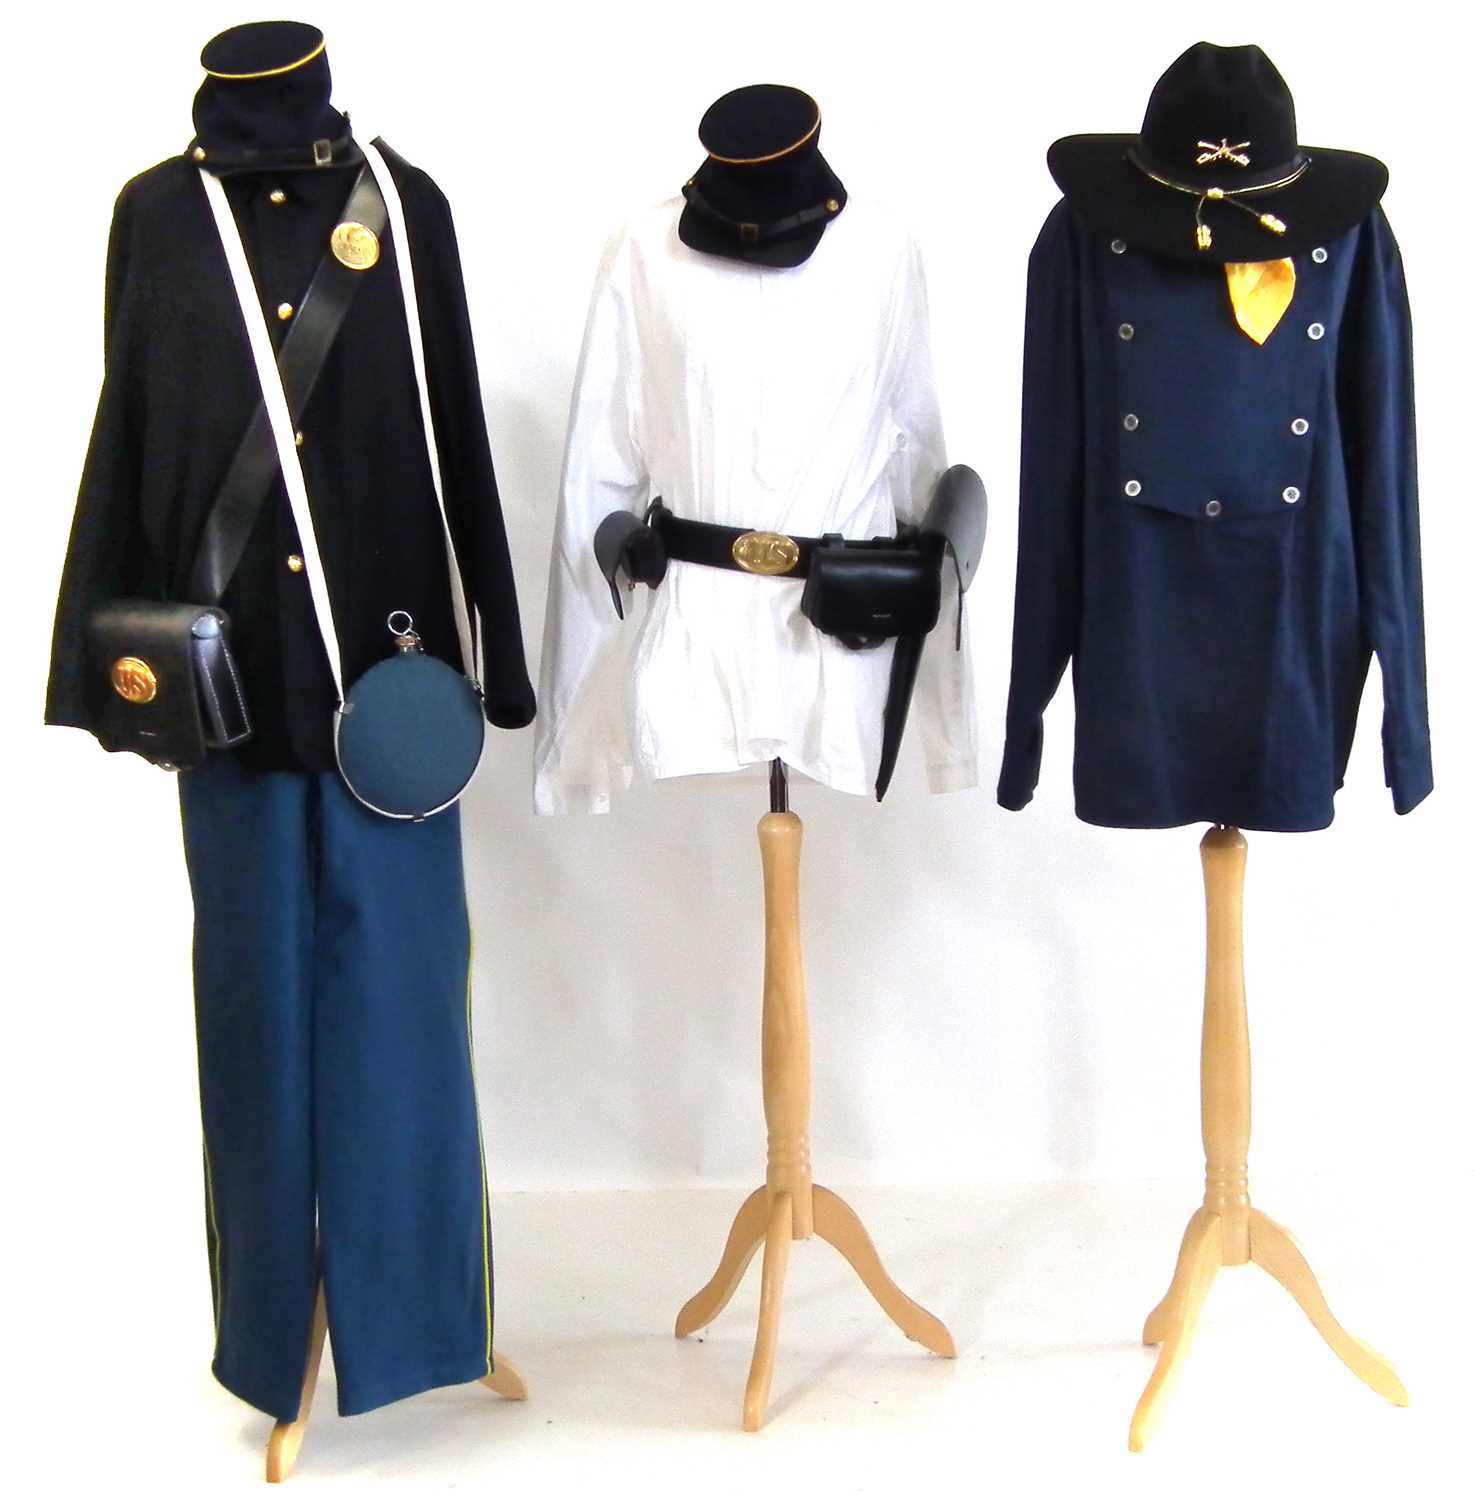 Lot 449 - American Civil War reproduction reenactor's uniforms